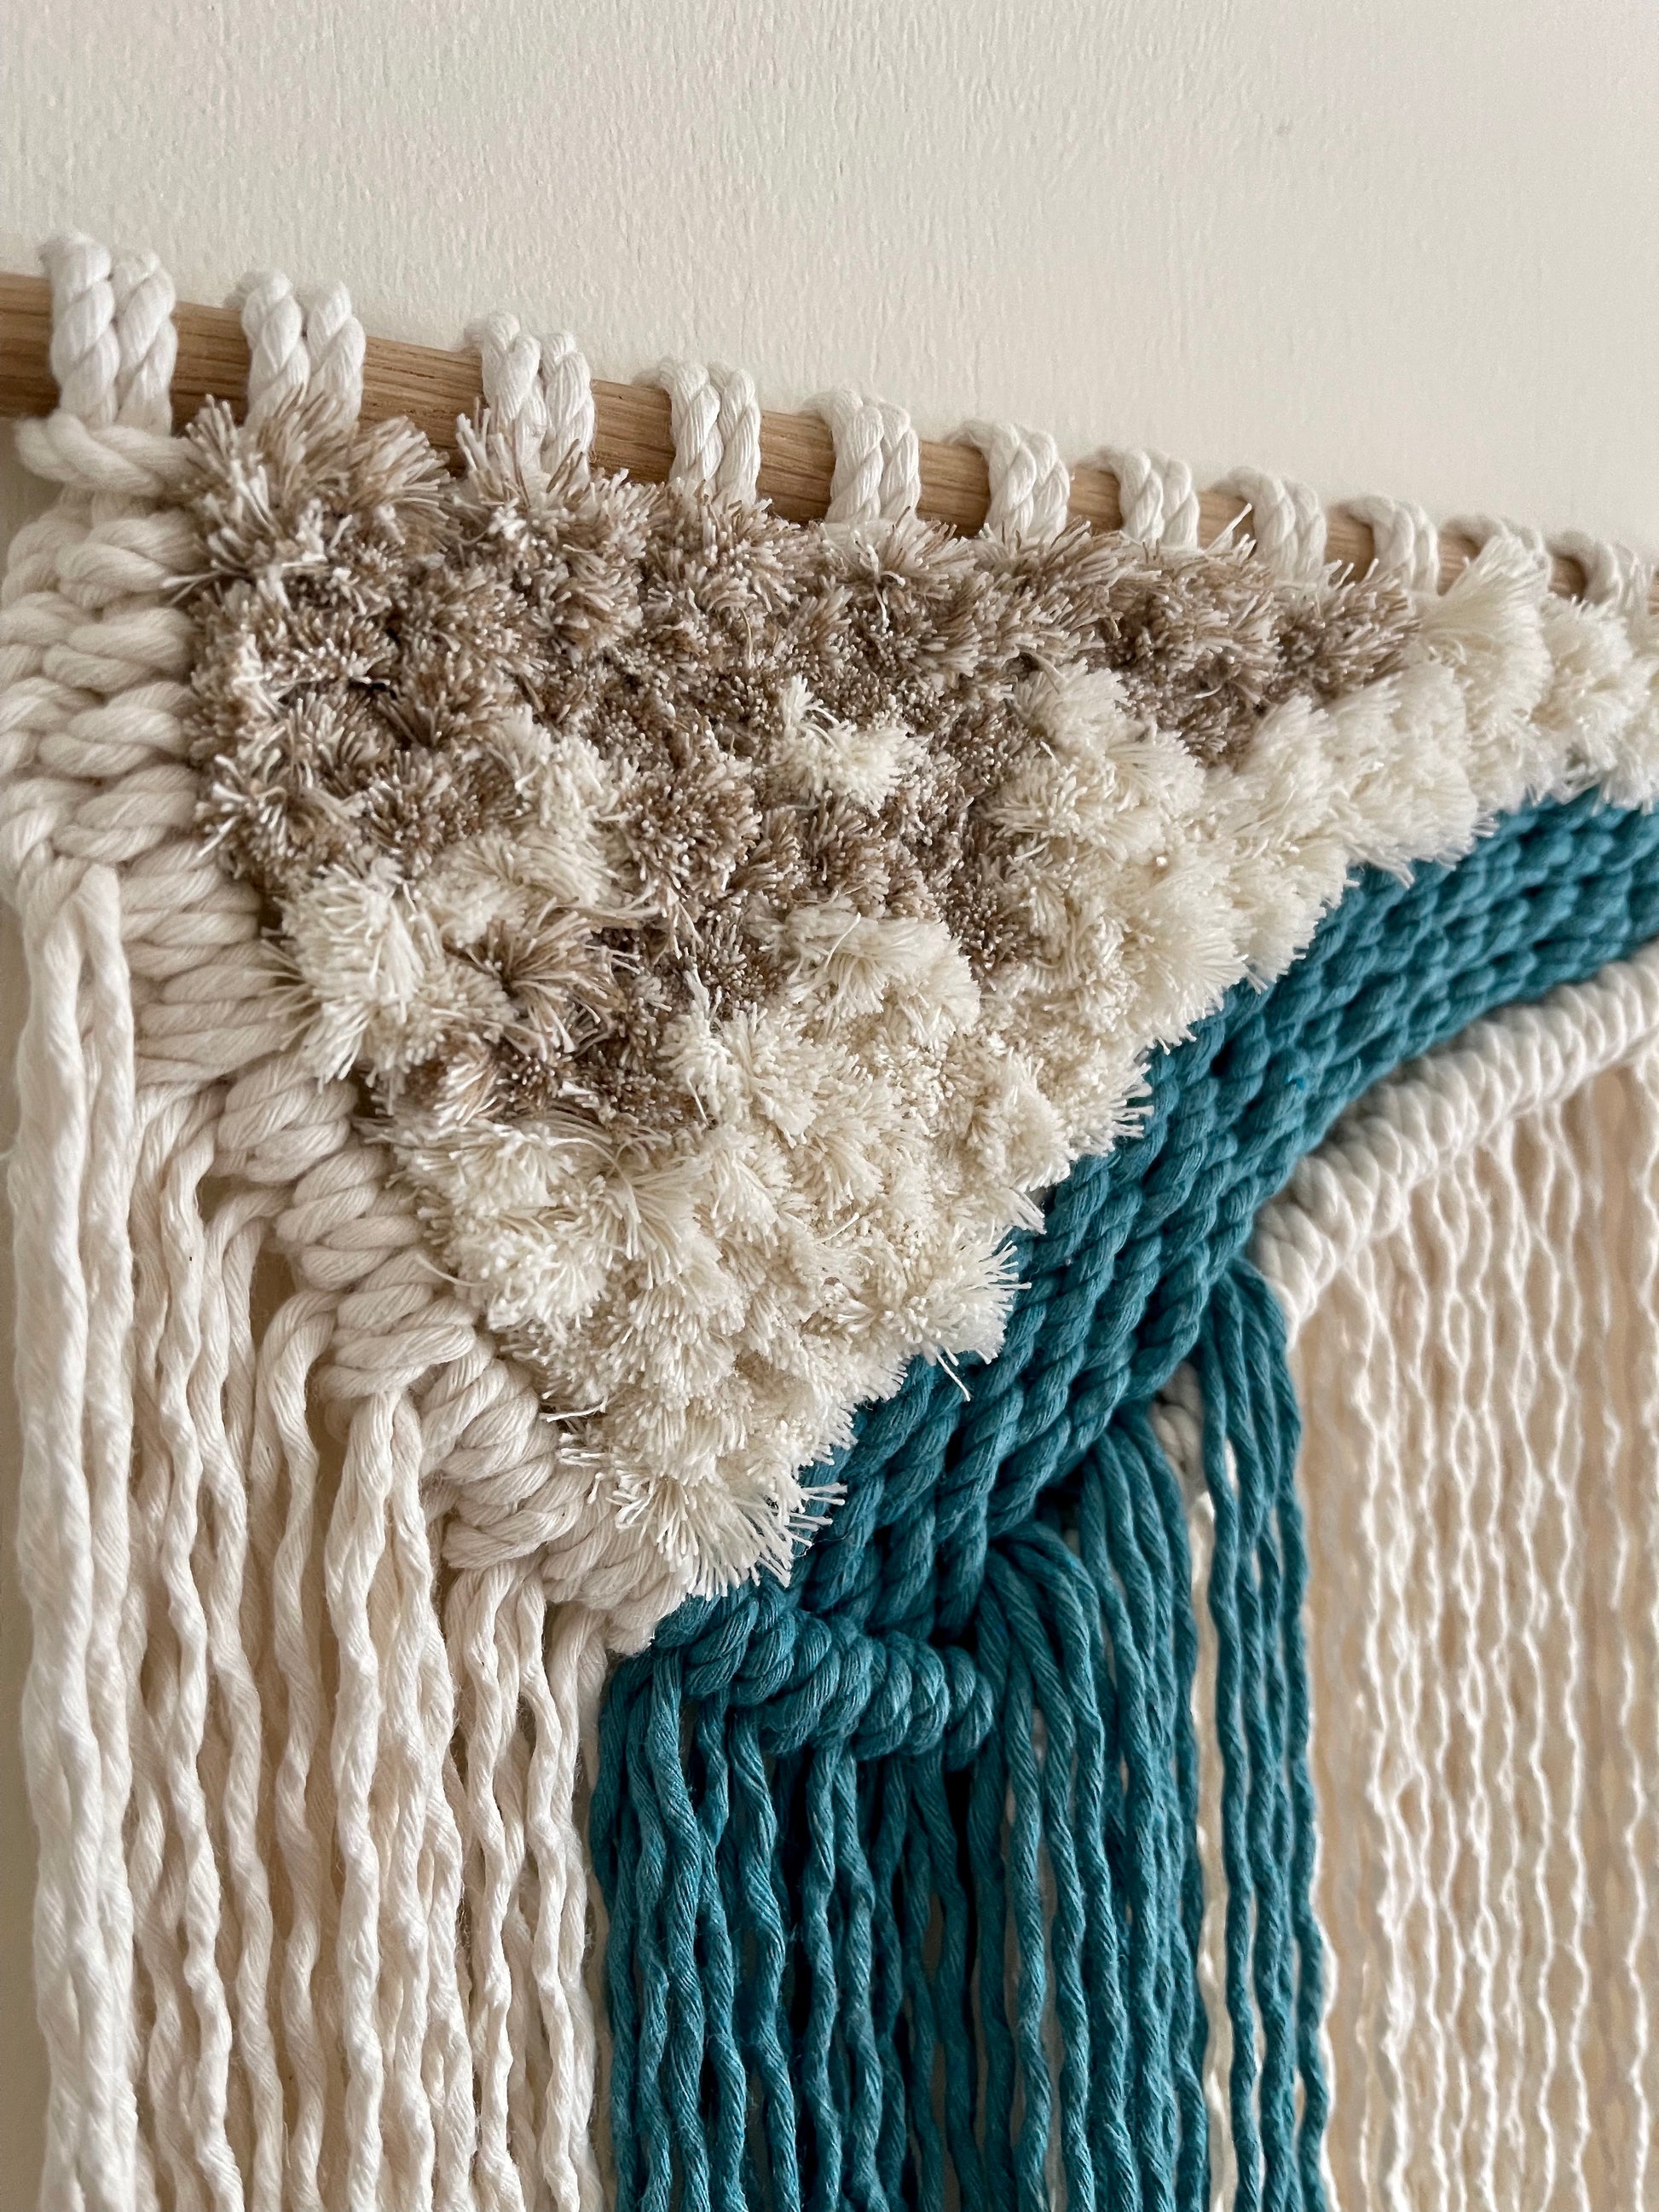 Handmade ocean inspired macraweave fibre wall hanging in cream and teal